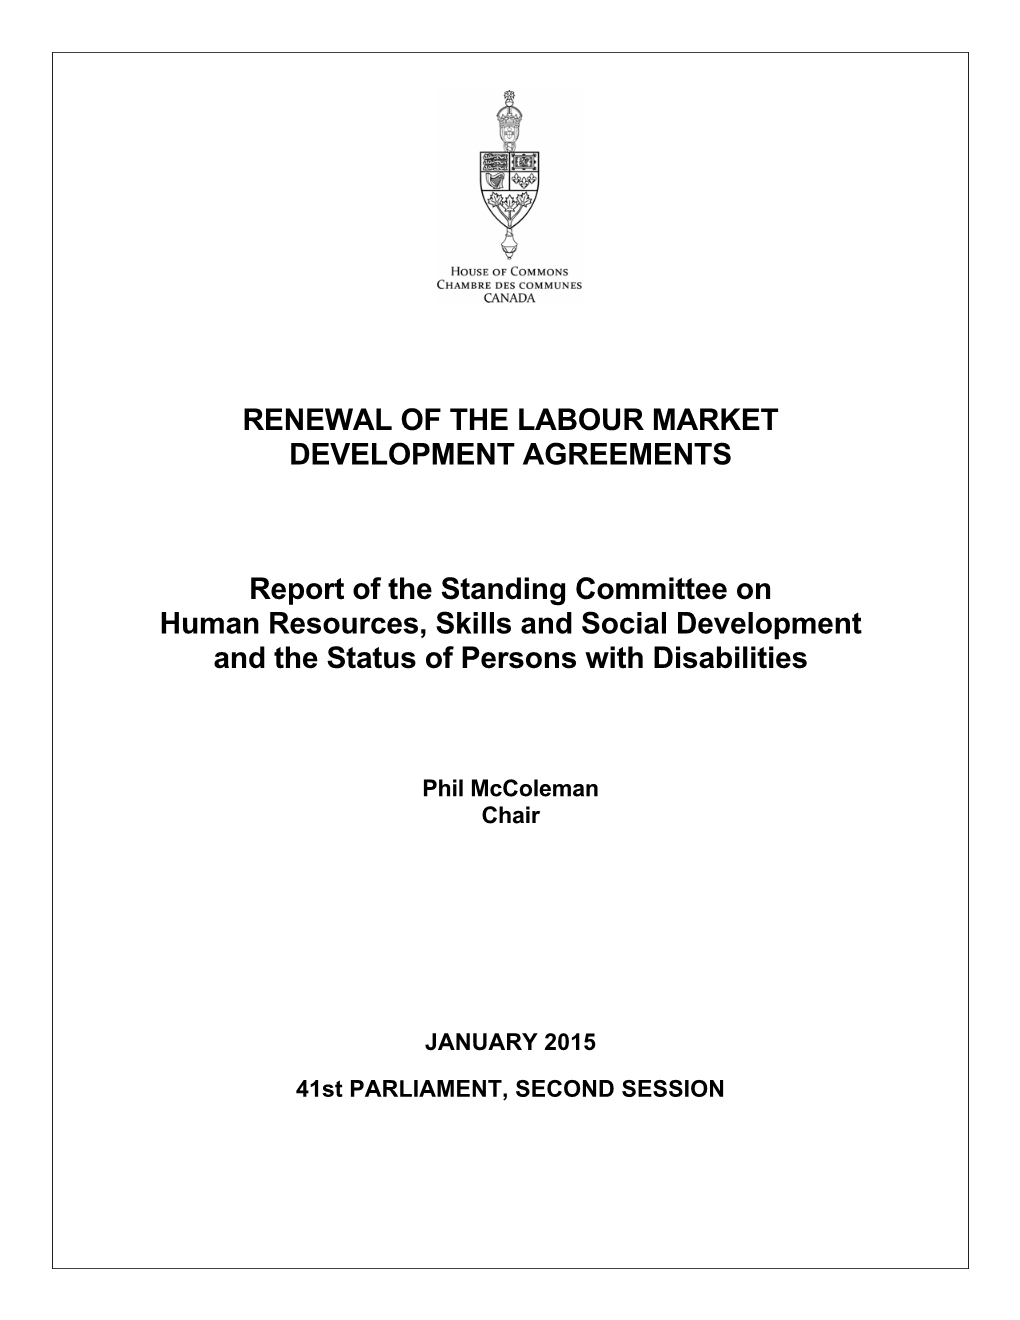 Labour Market Development Agreements